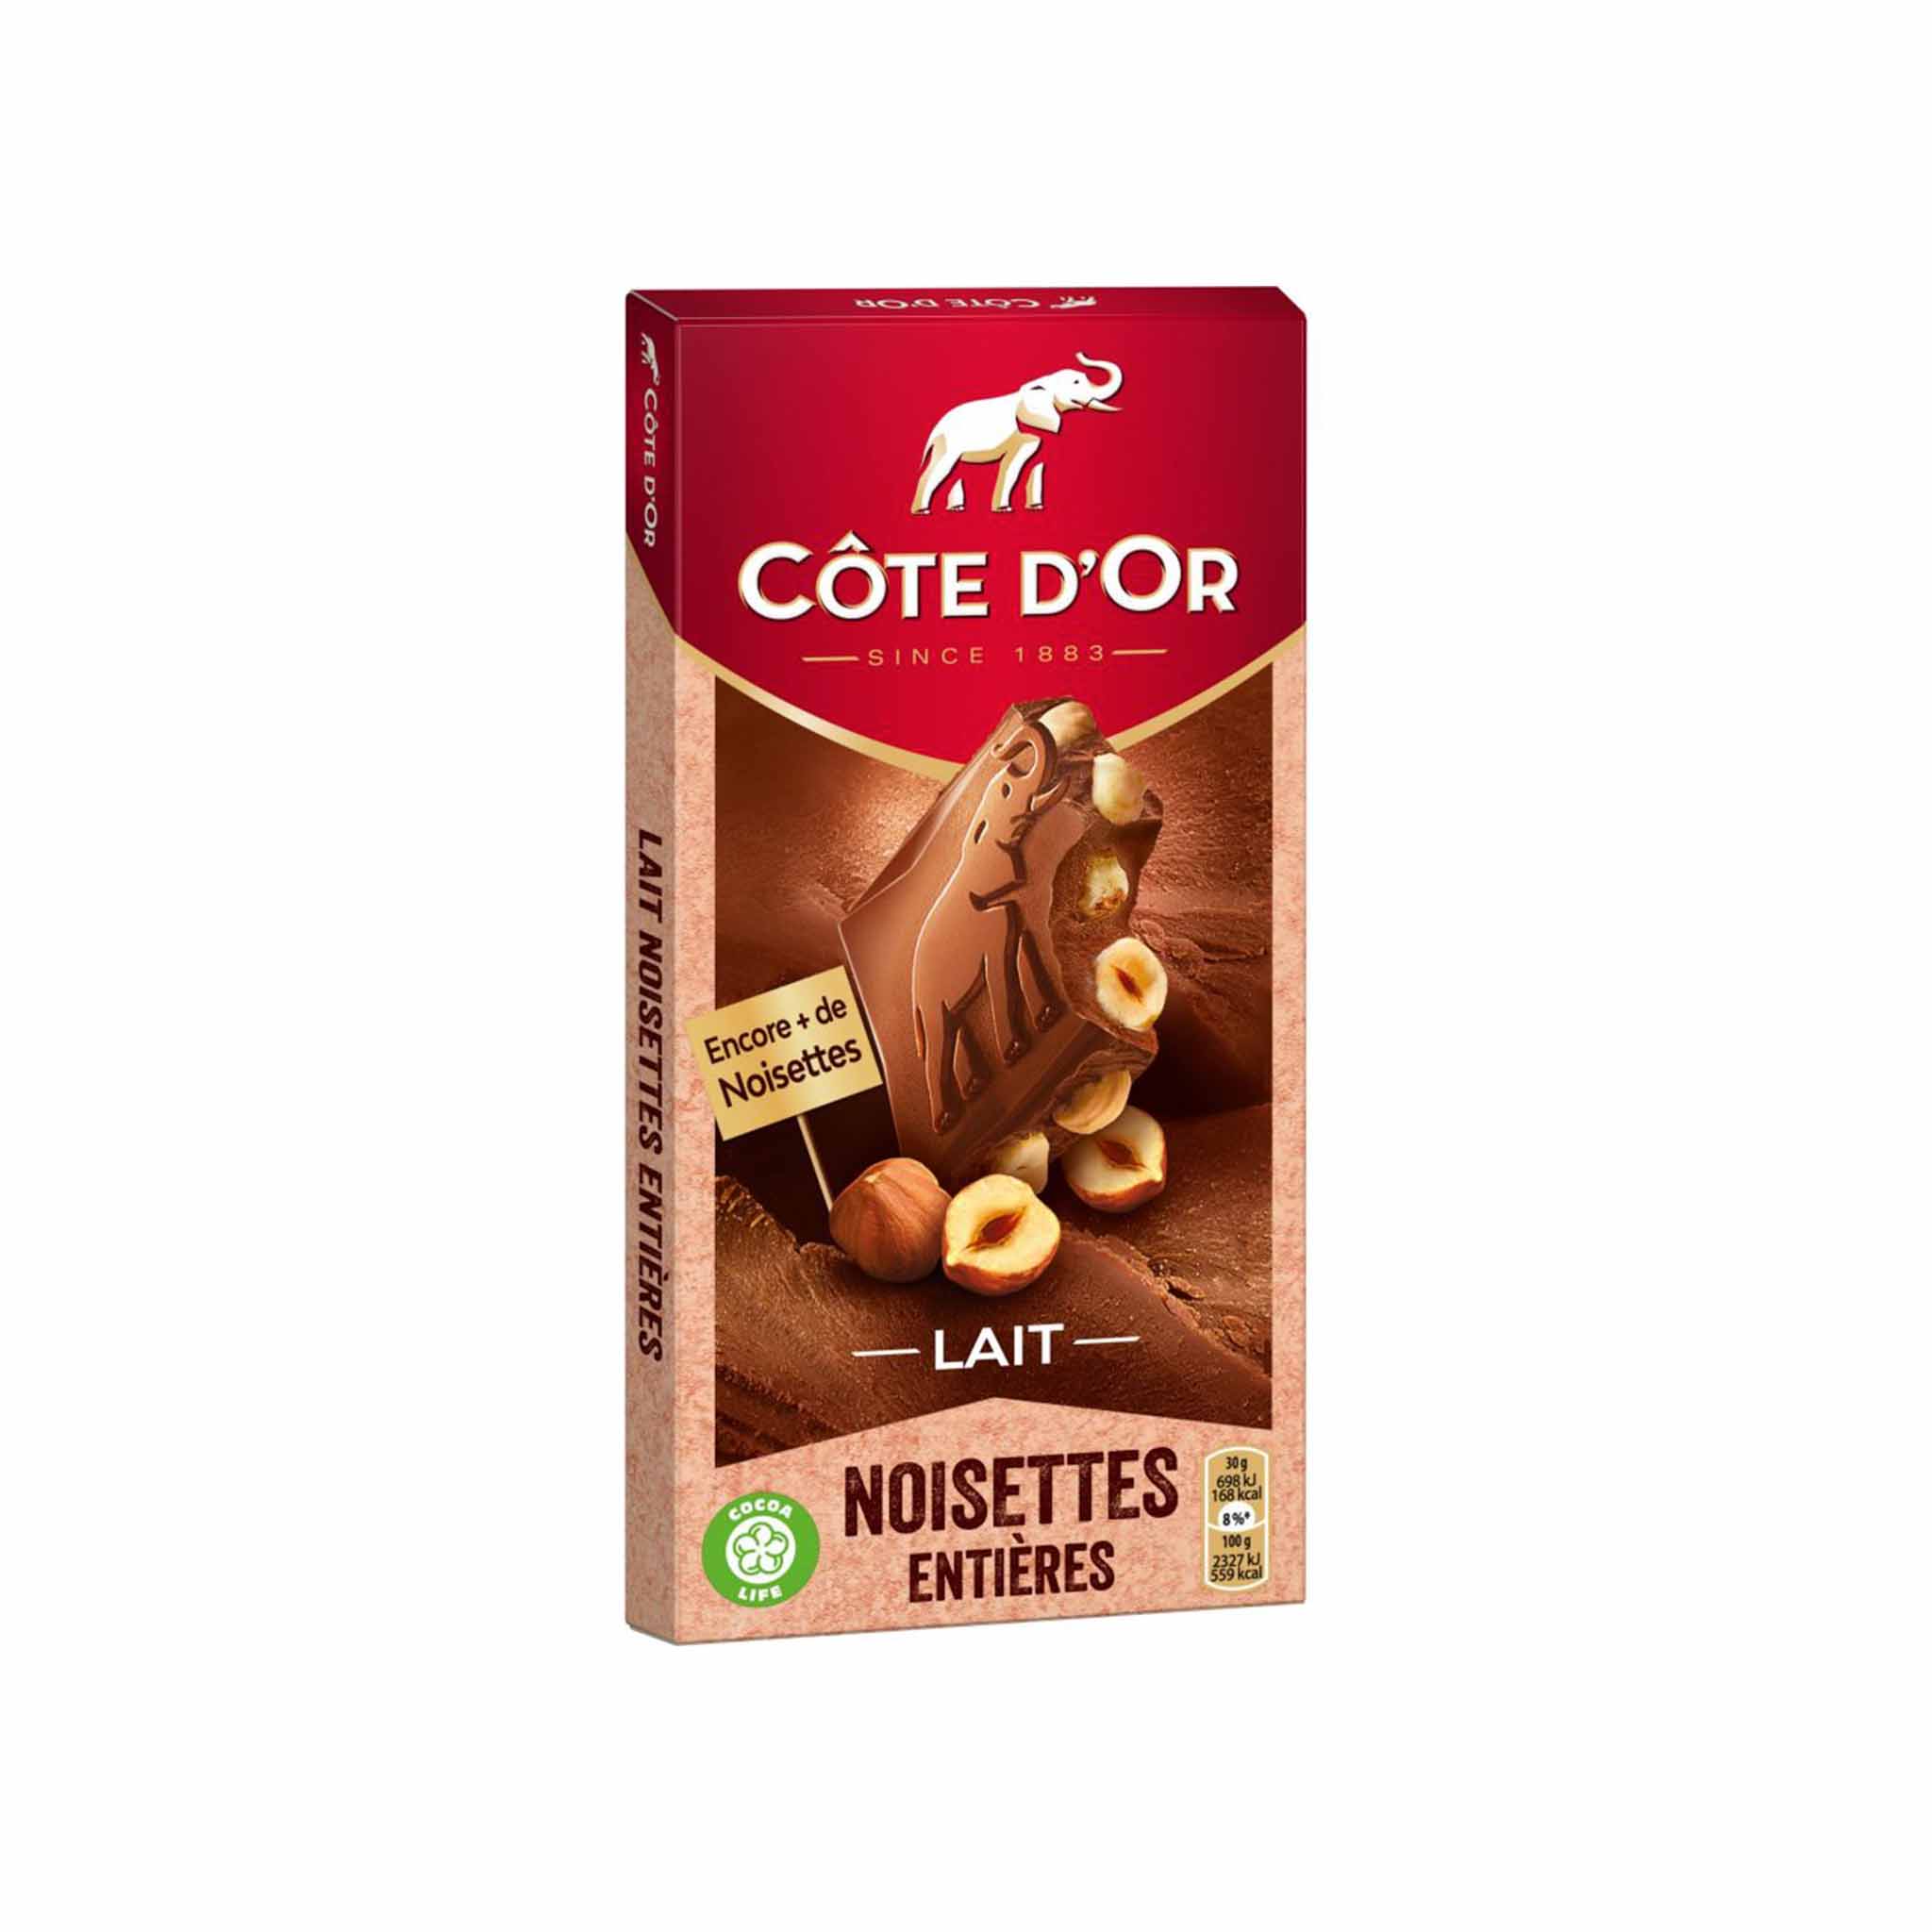 COTE D'OR HAZELNUT MILK CHOCOLATE 100g